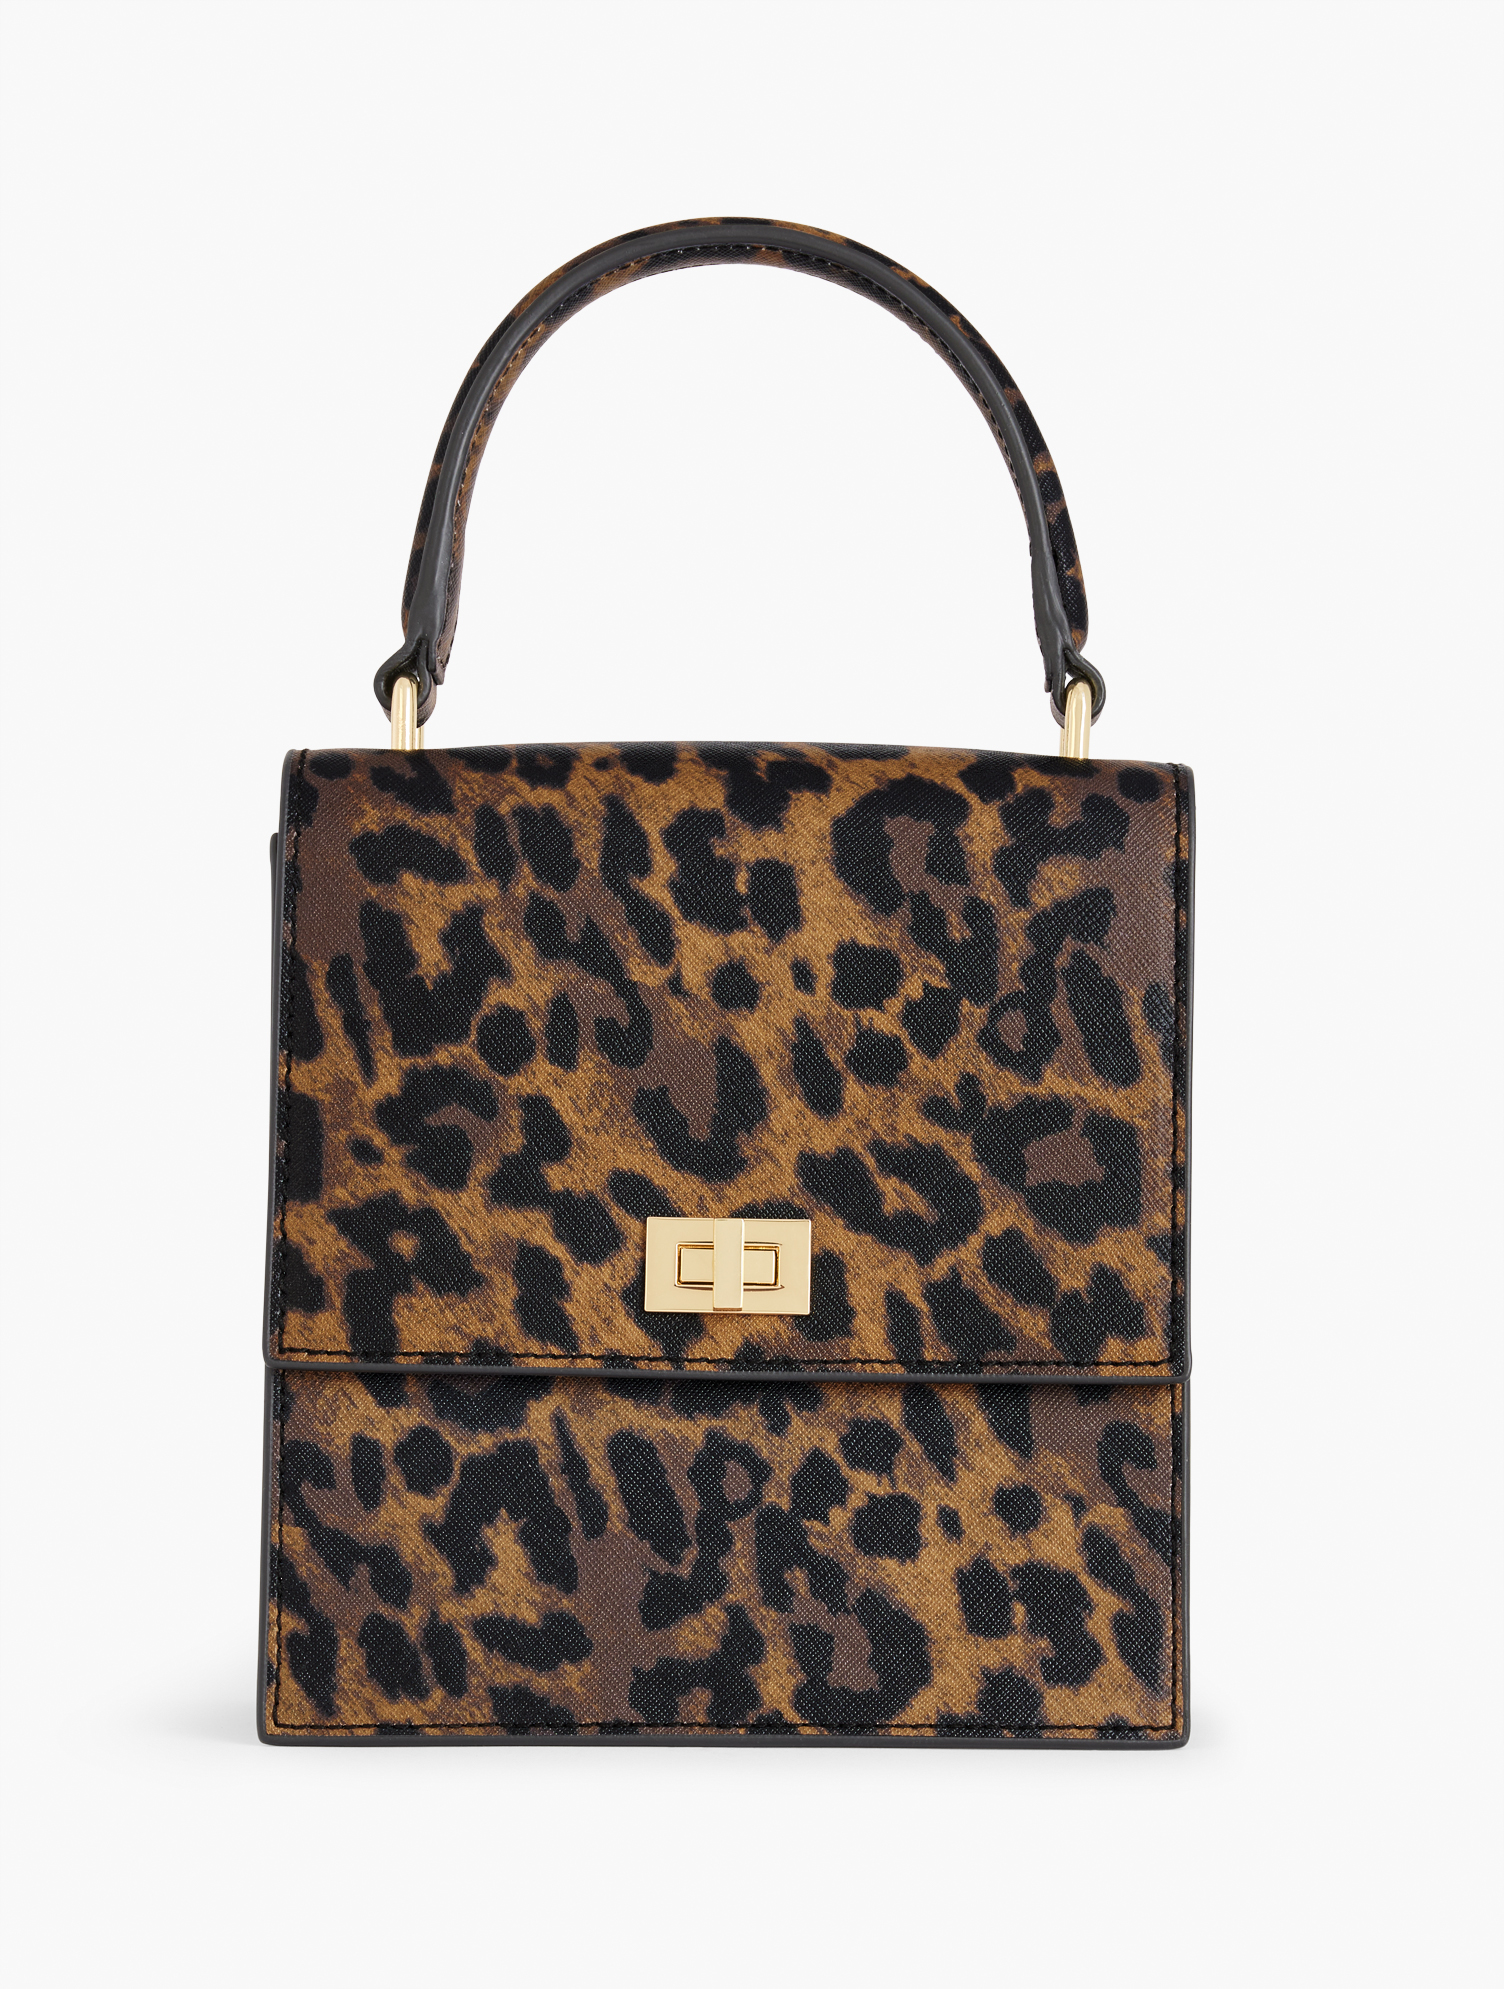 Crossbody Bag - Calf Hair Leopard - Medium Brown - 001 Talbots